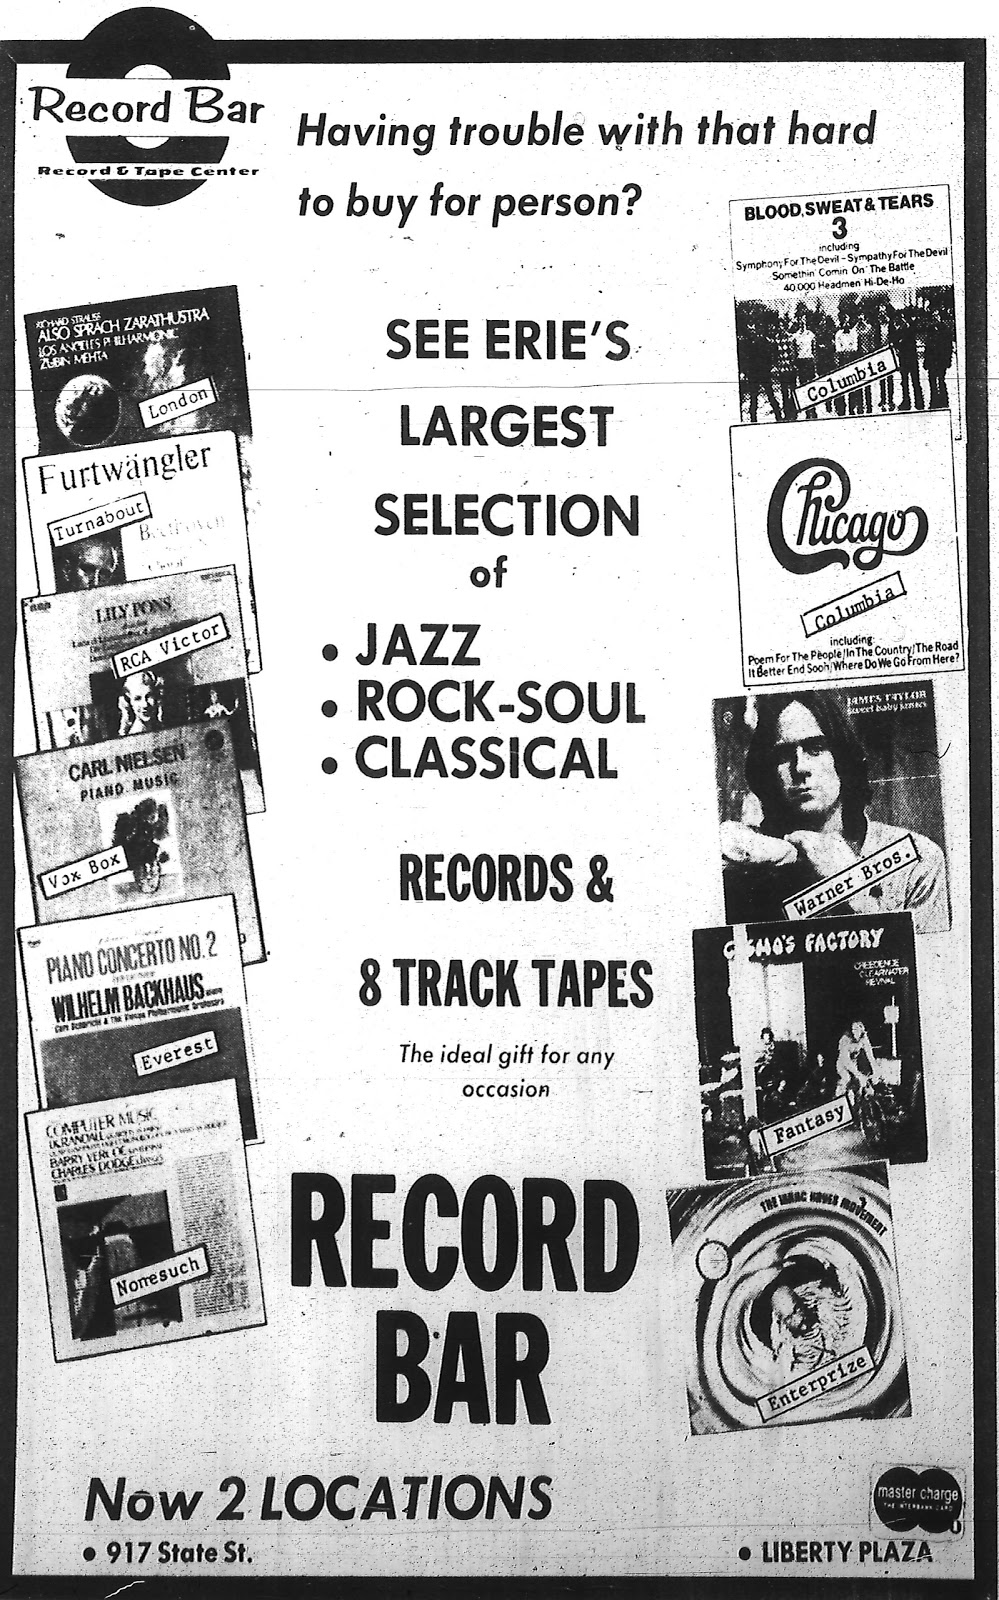 RecordBarAdETN12-20-1970.jpg